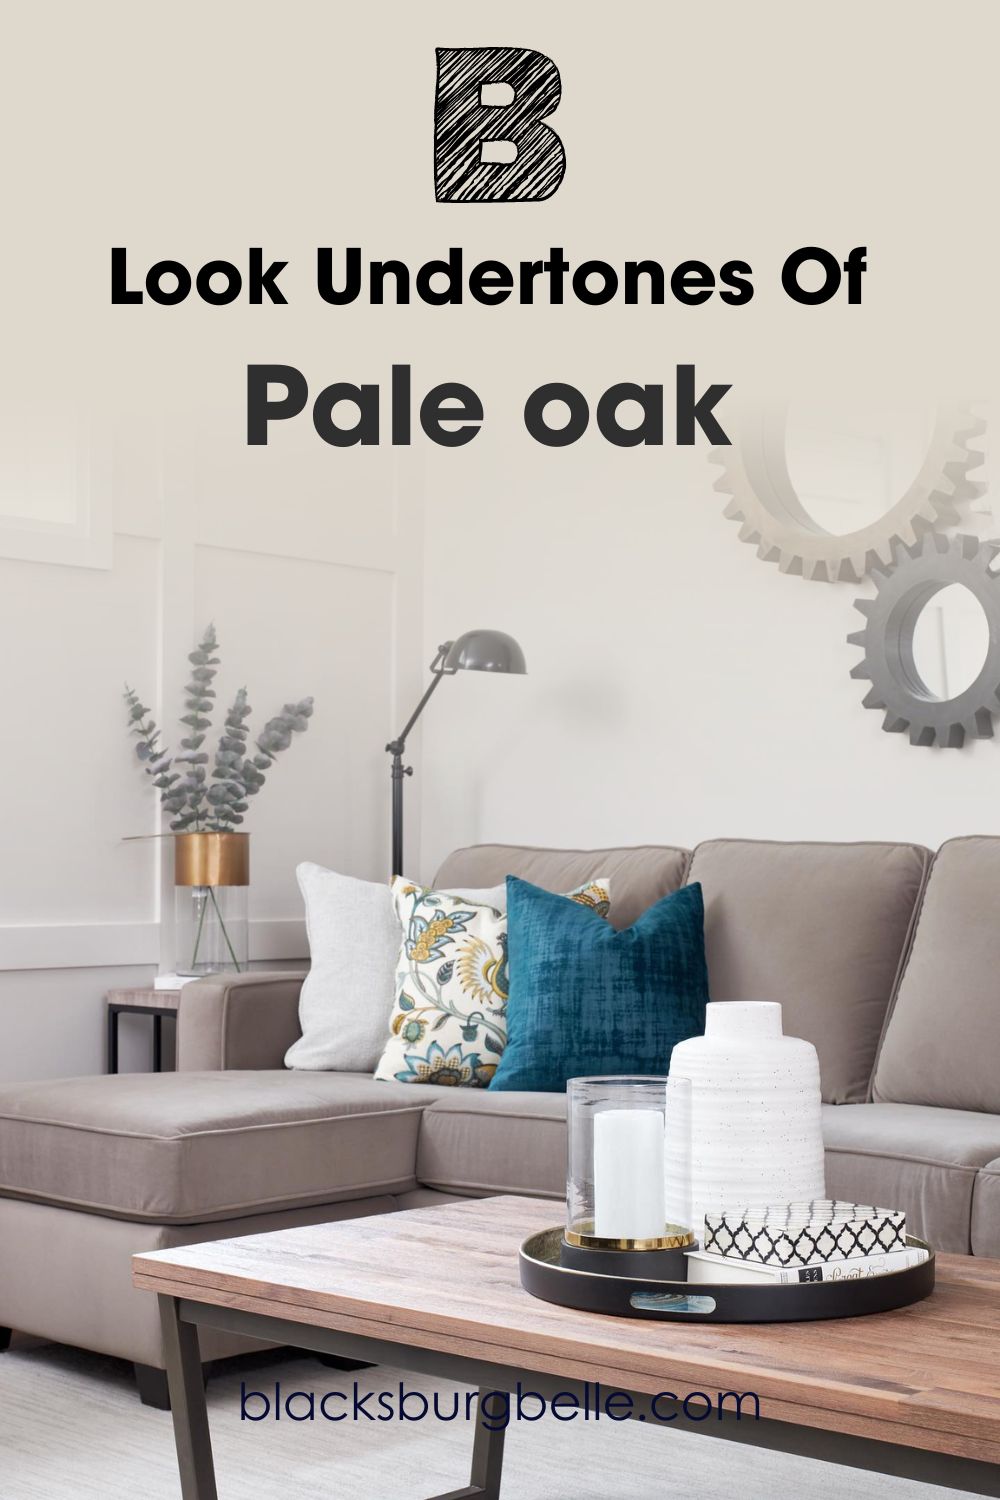 Look Undertones Of Pale oak